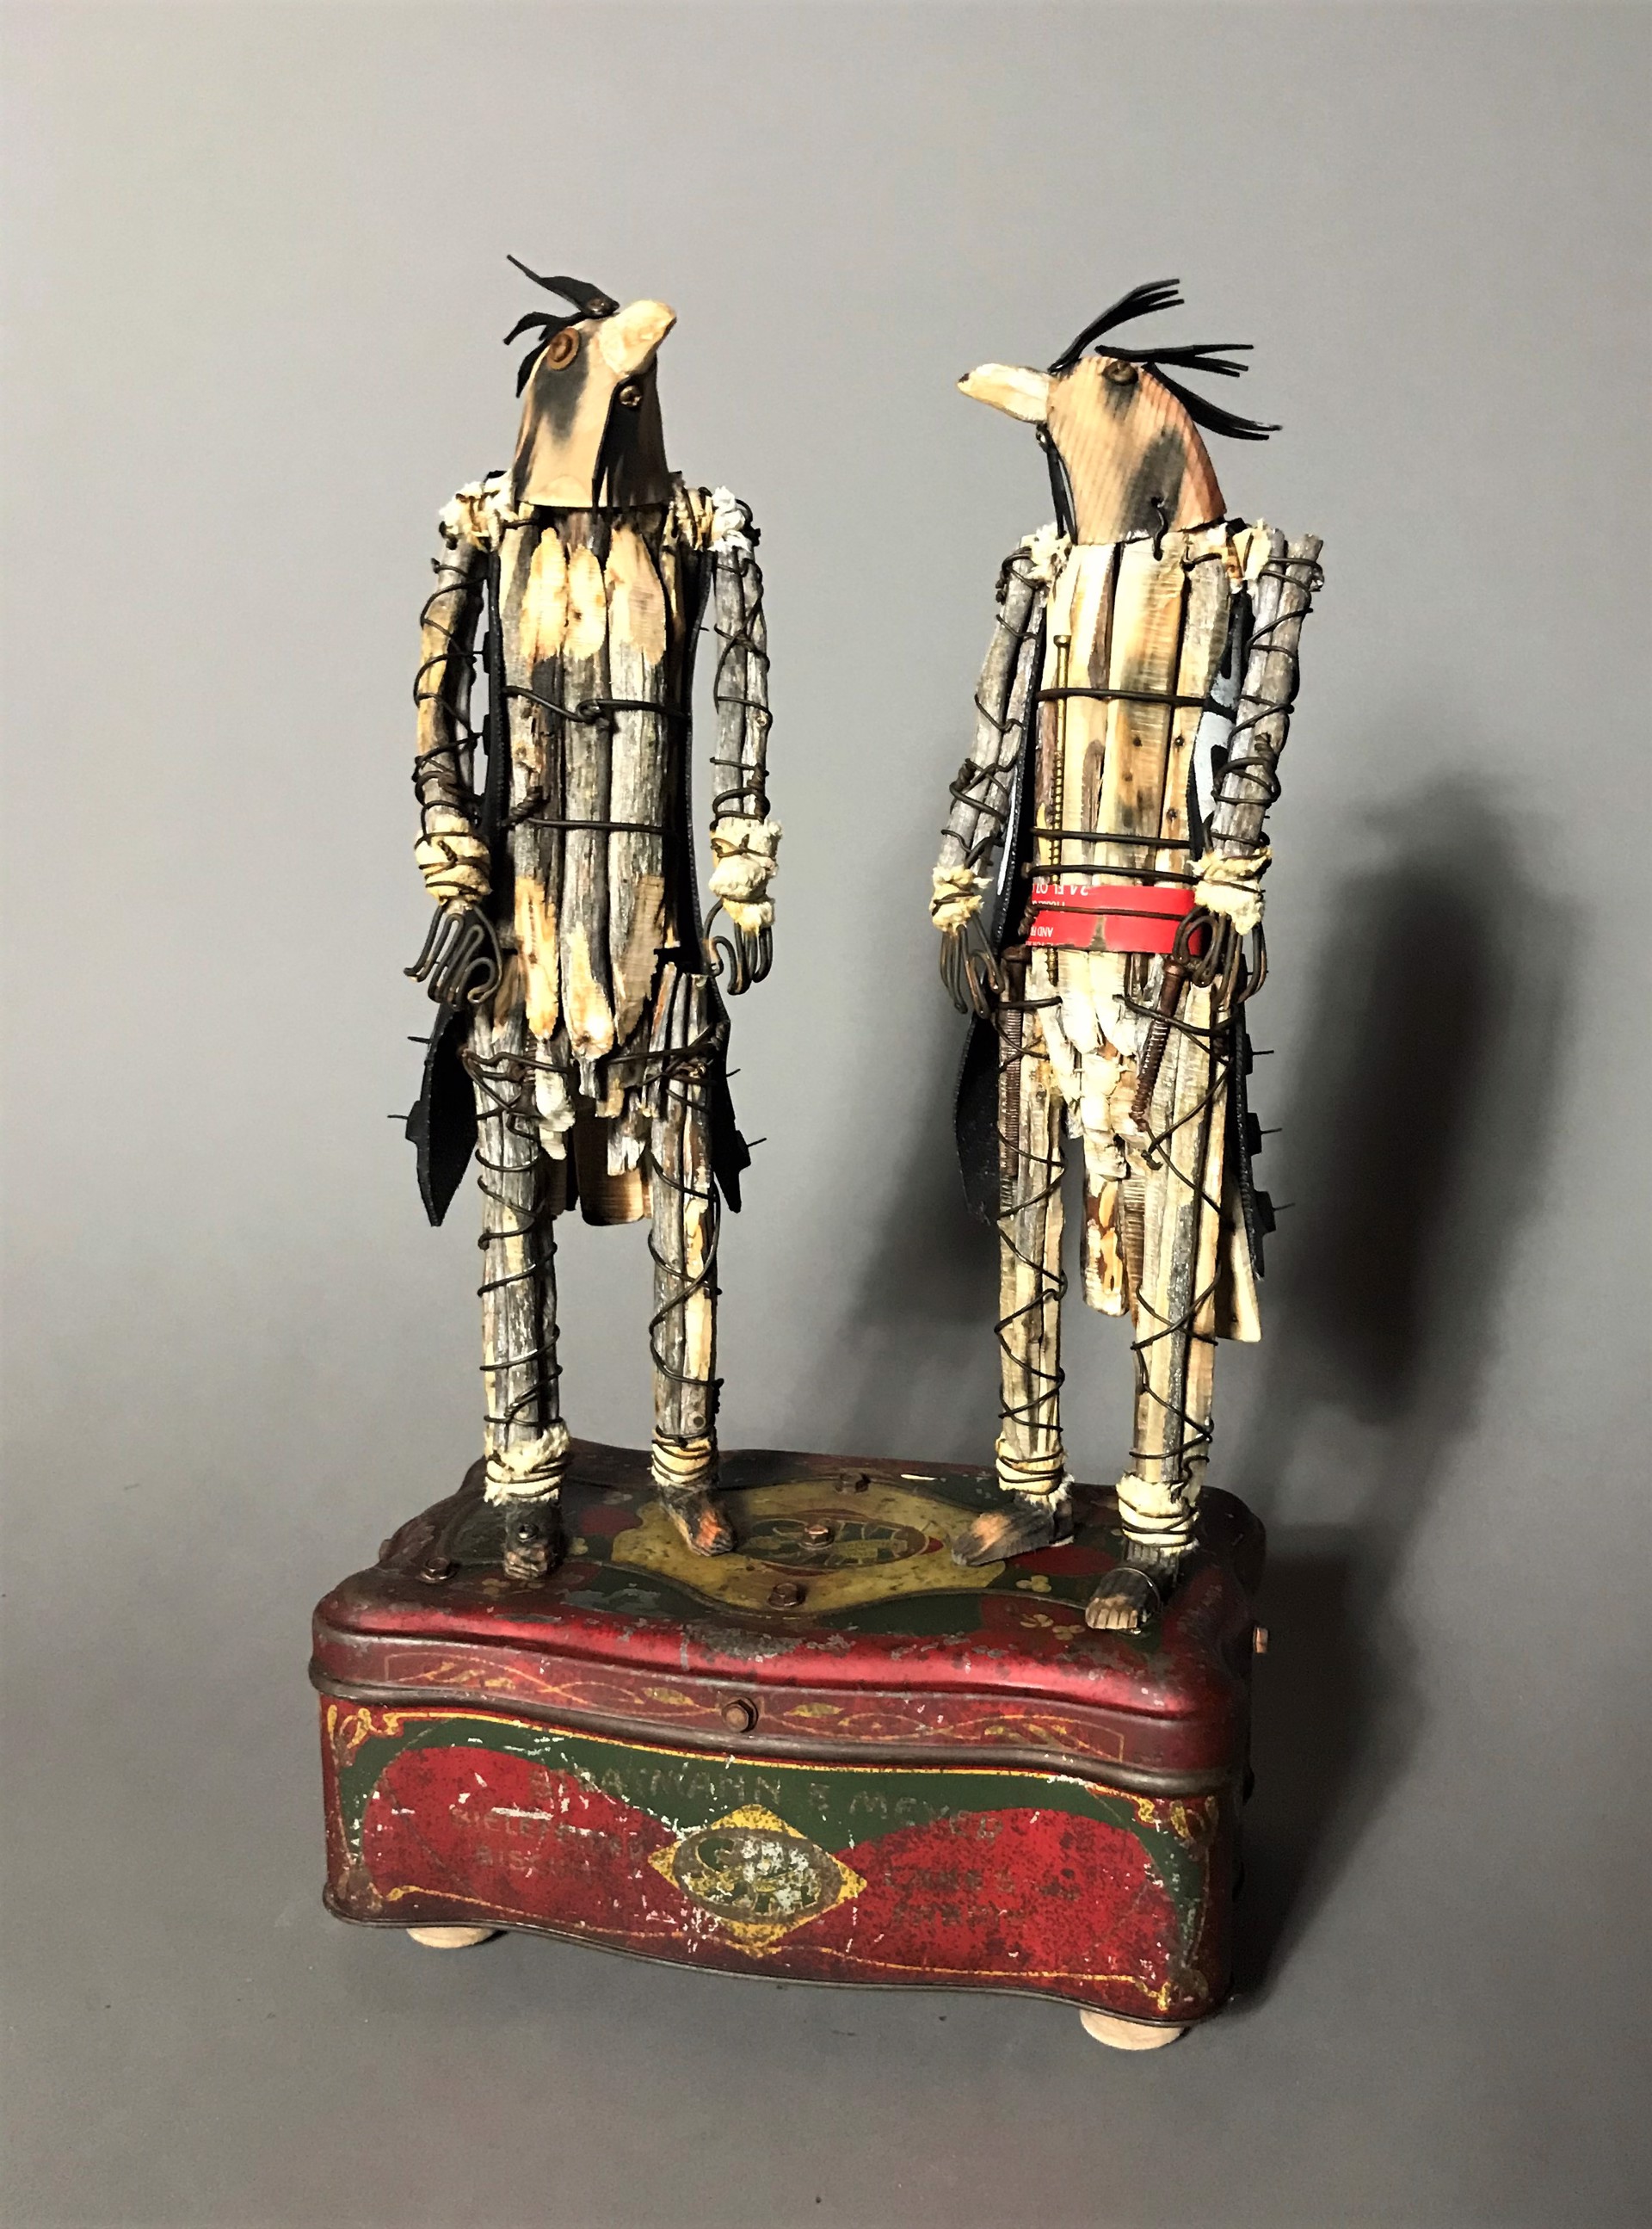 The Raven Twins by Geoffrey Gorman